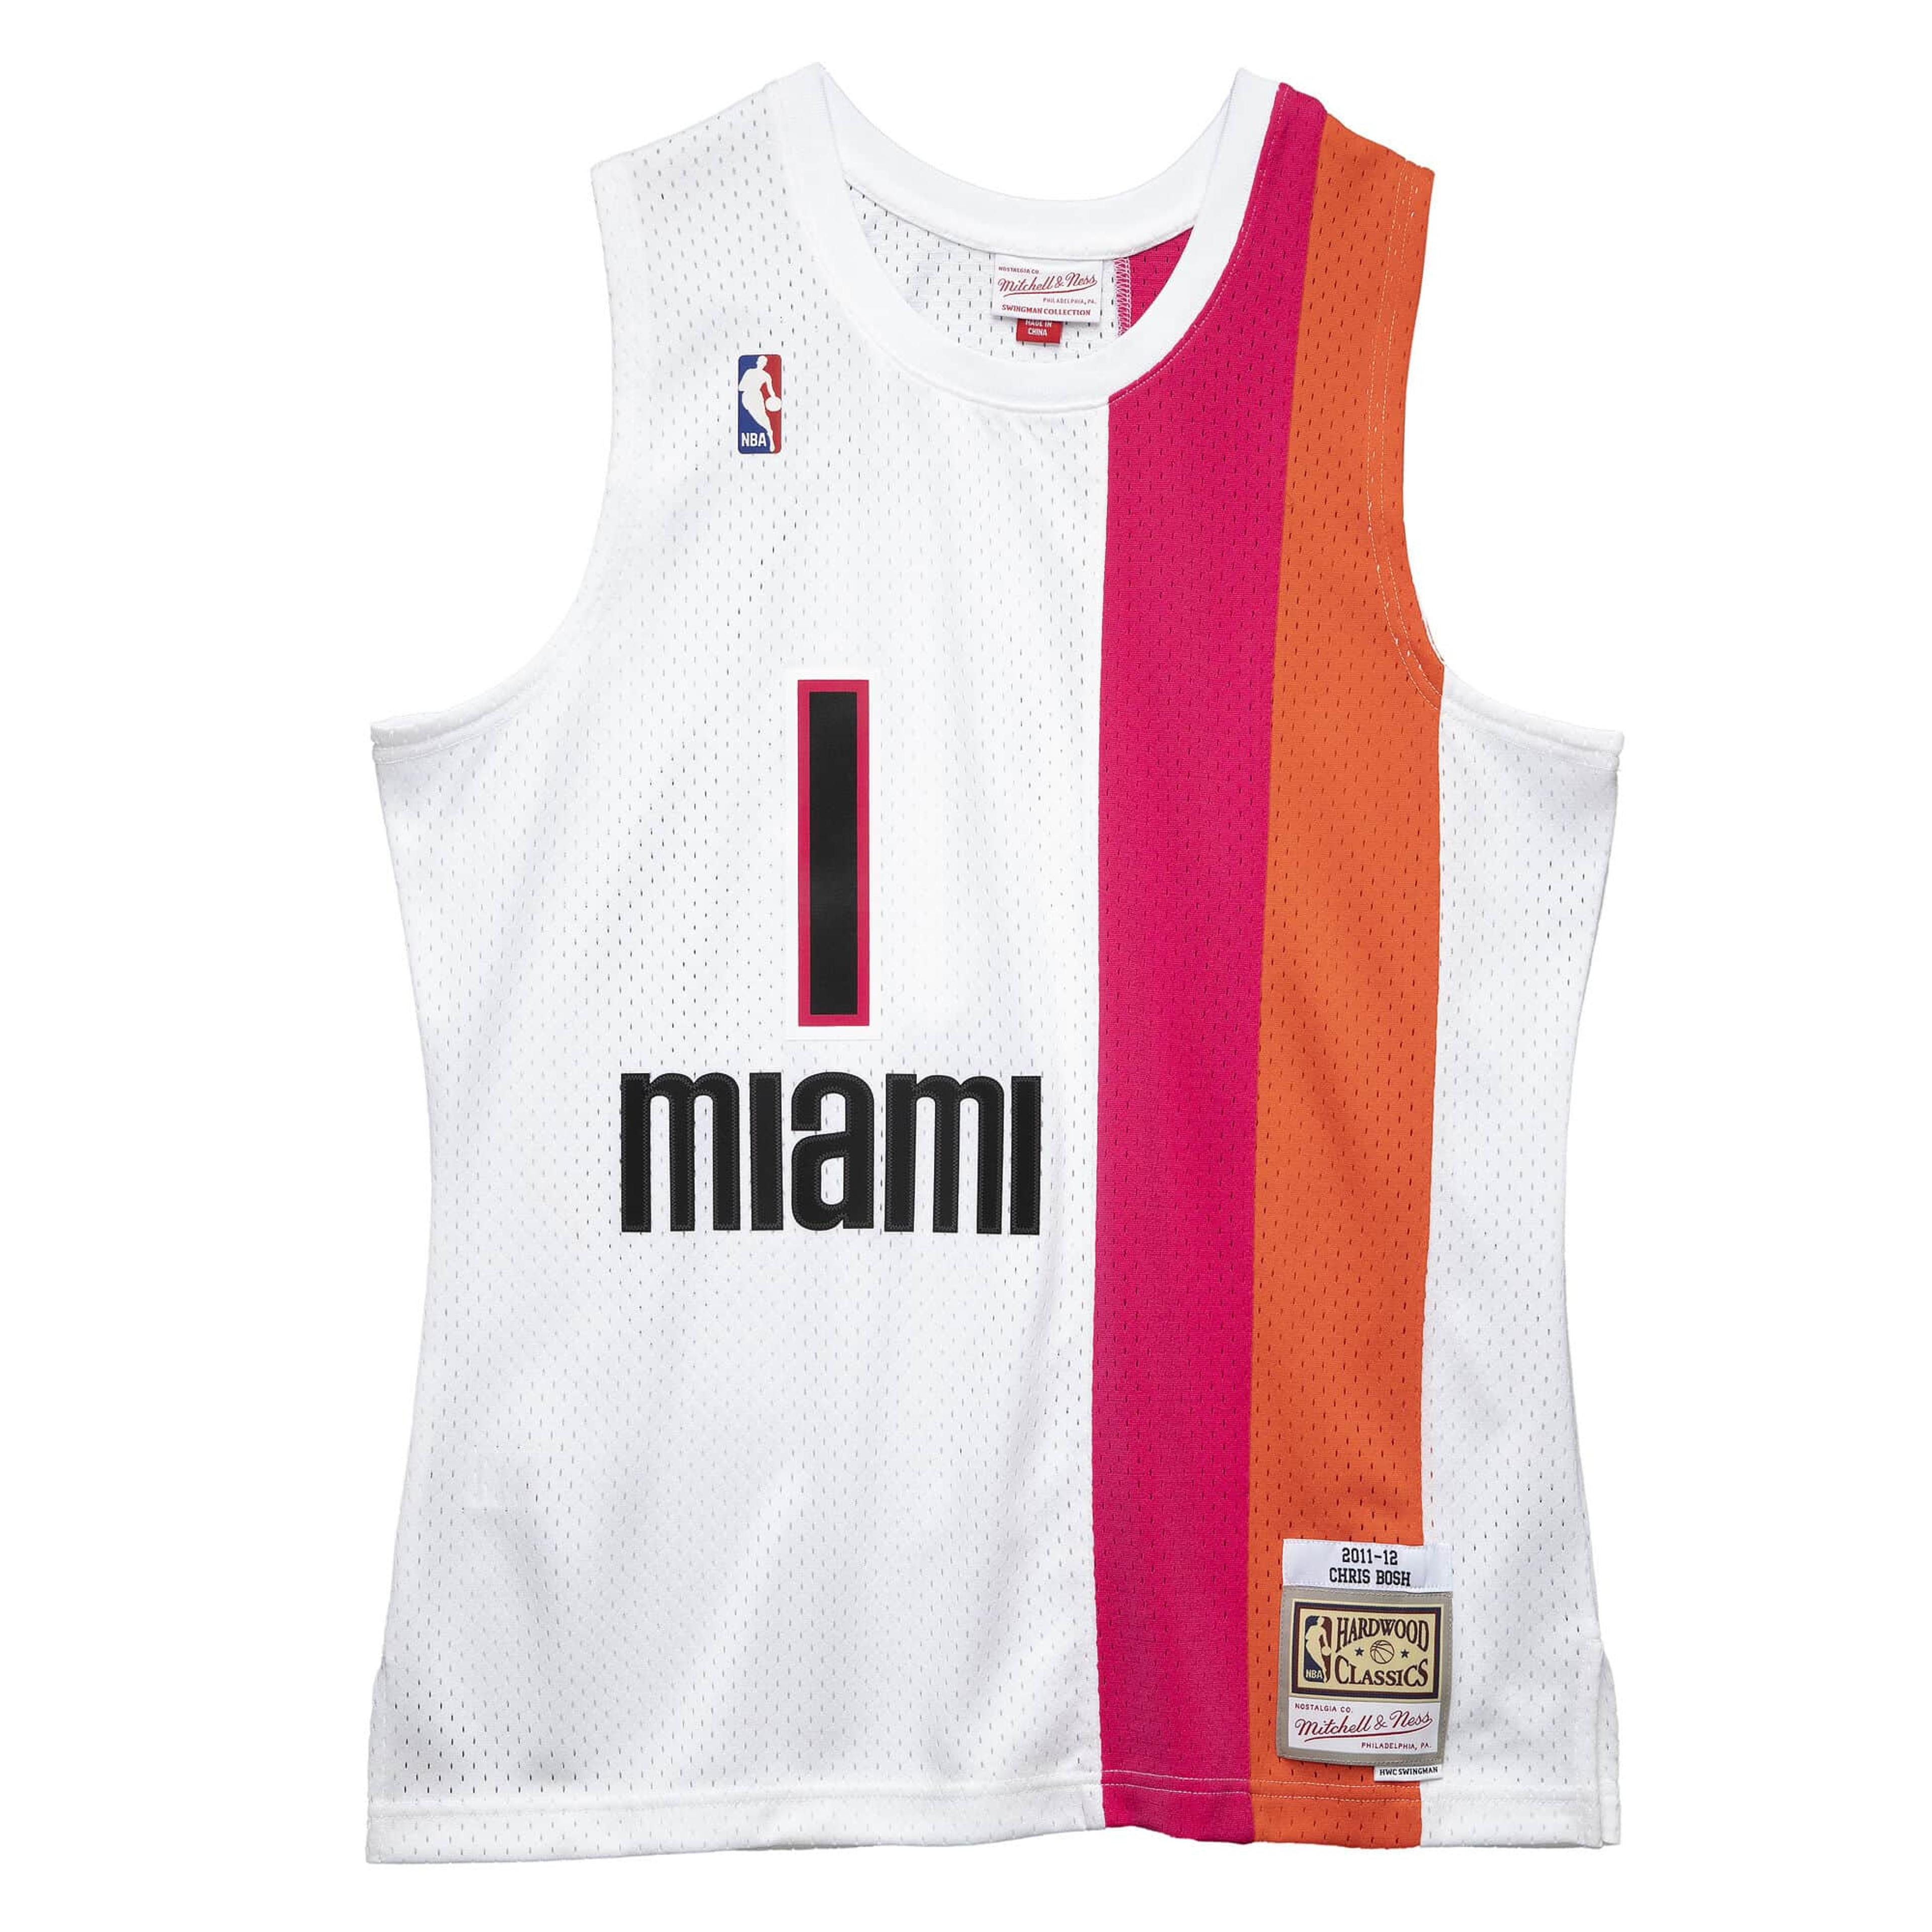 Mitchell & Ness: Hardwood Classic Miami Heat Jersey (Chris Bosh)